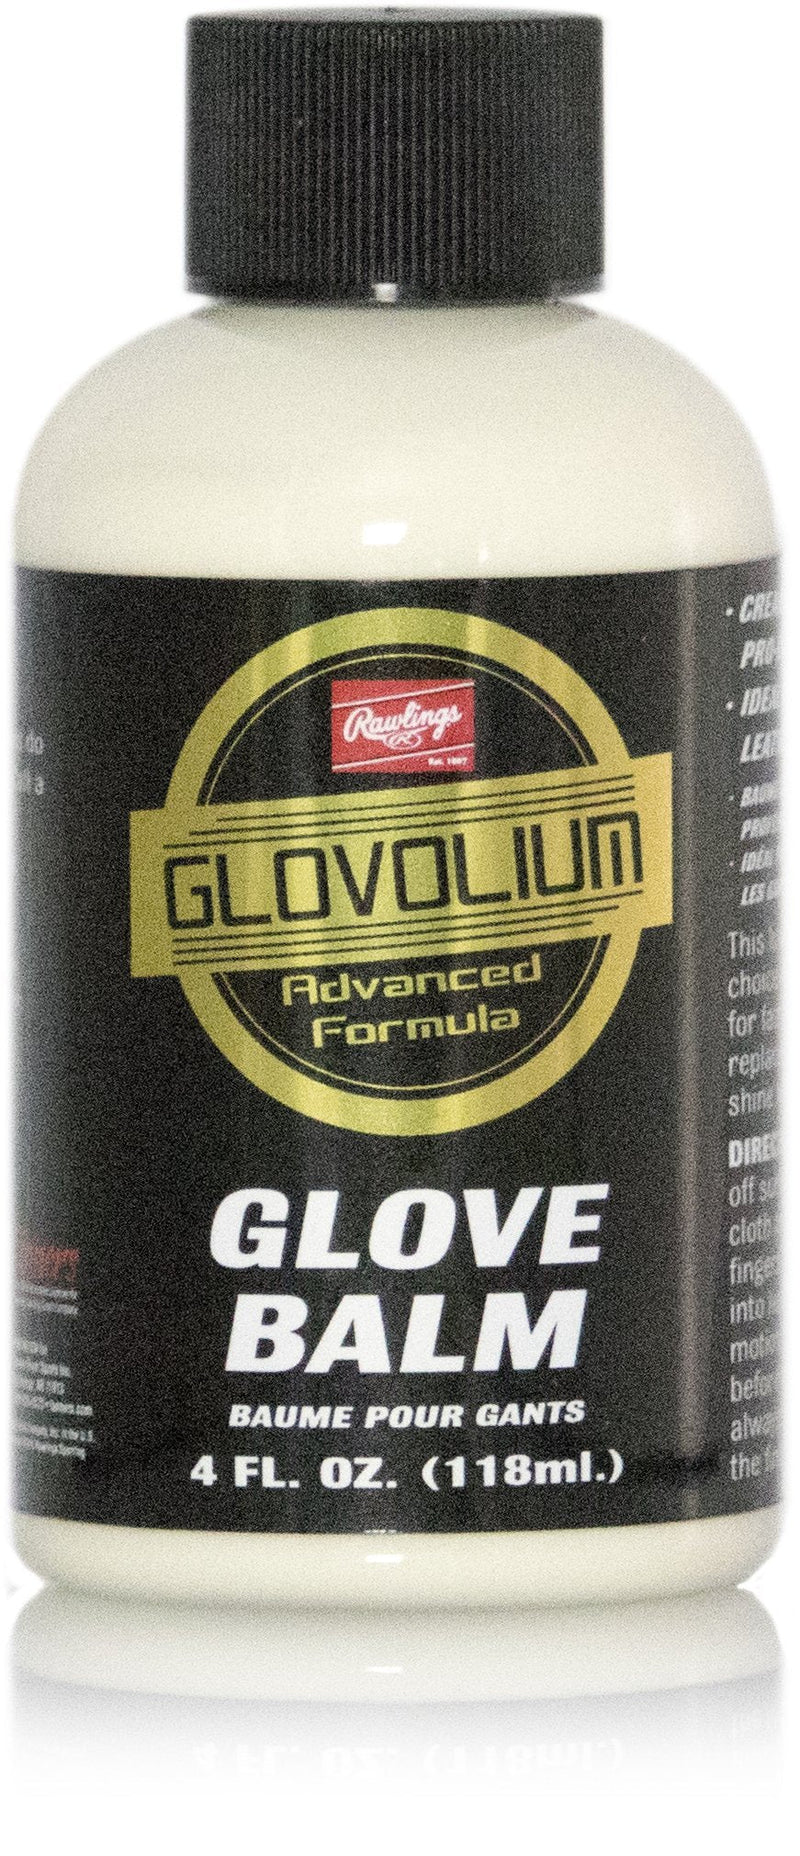 [AUSTRALIA] - Rawlings GLVBALM Glovolium Glove Balm with Display Pack 